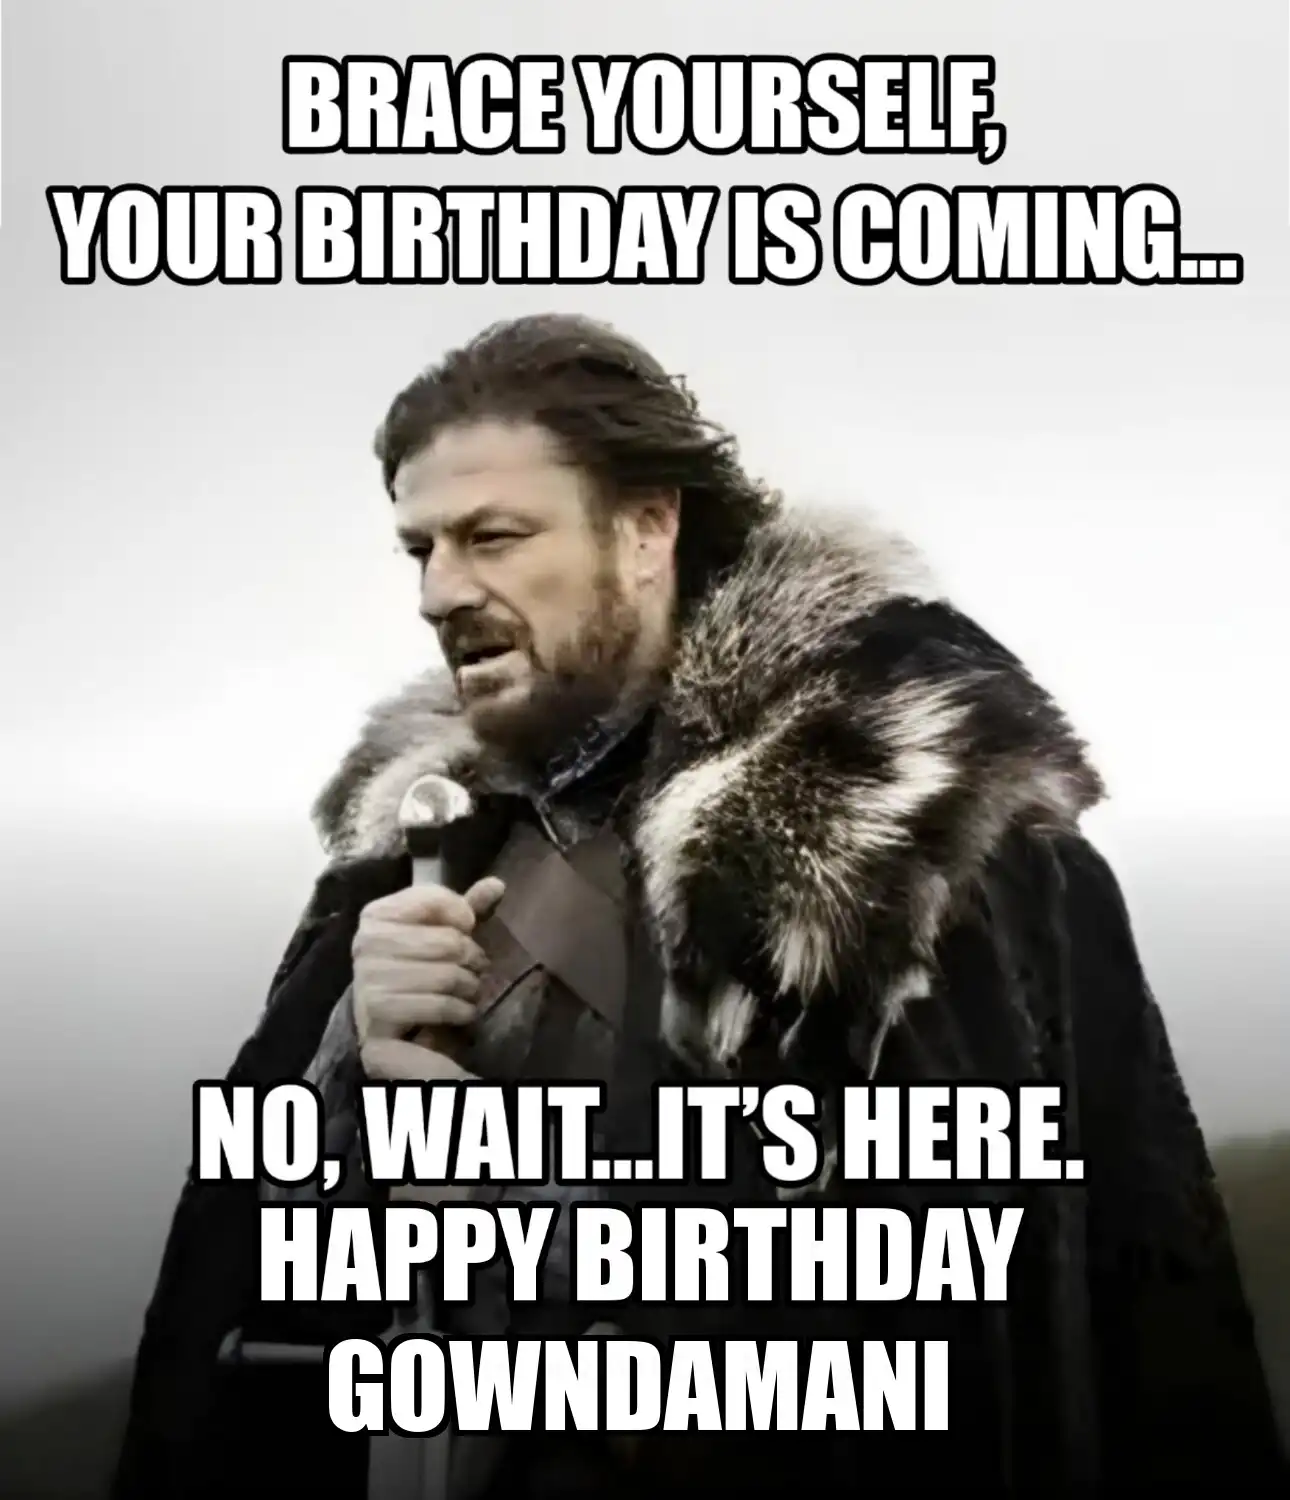 Happy Birthday Gowndamani Brace Yourself Your Birthday Is Coming Meme